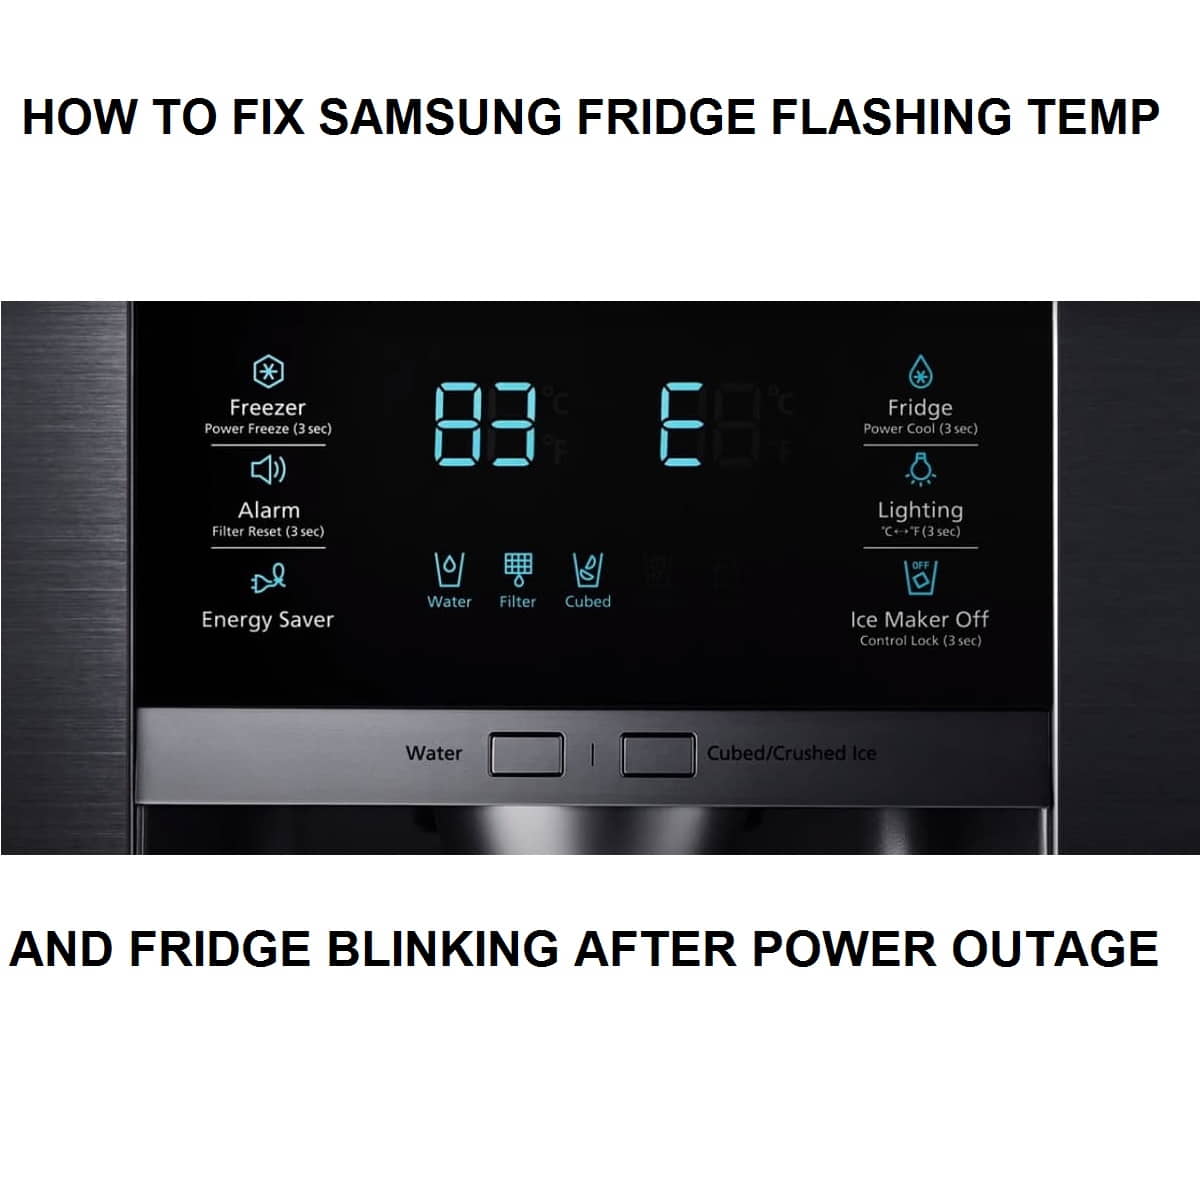 Samsung fridge flashing temp